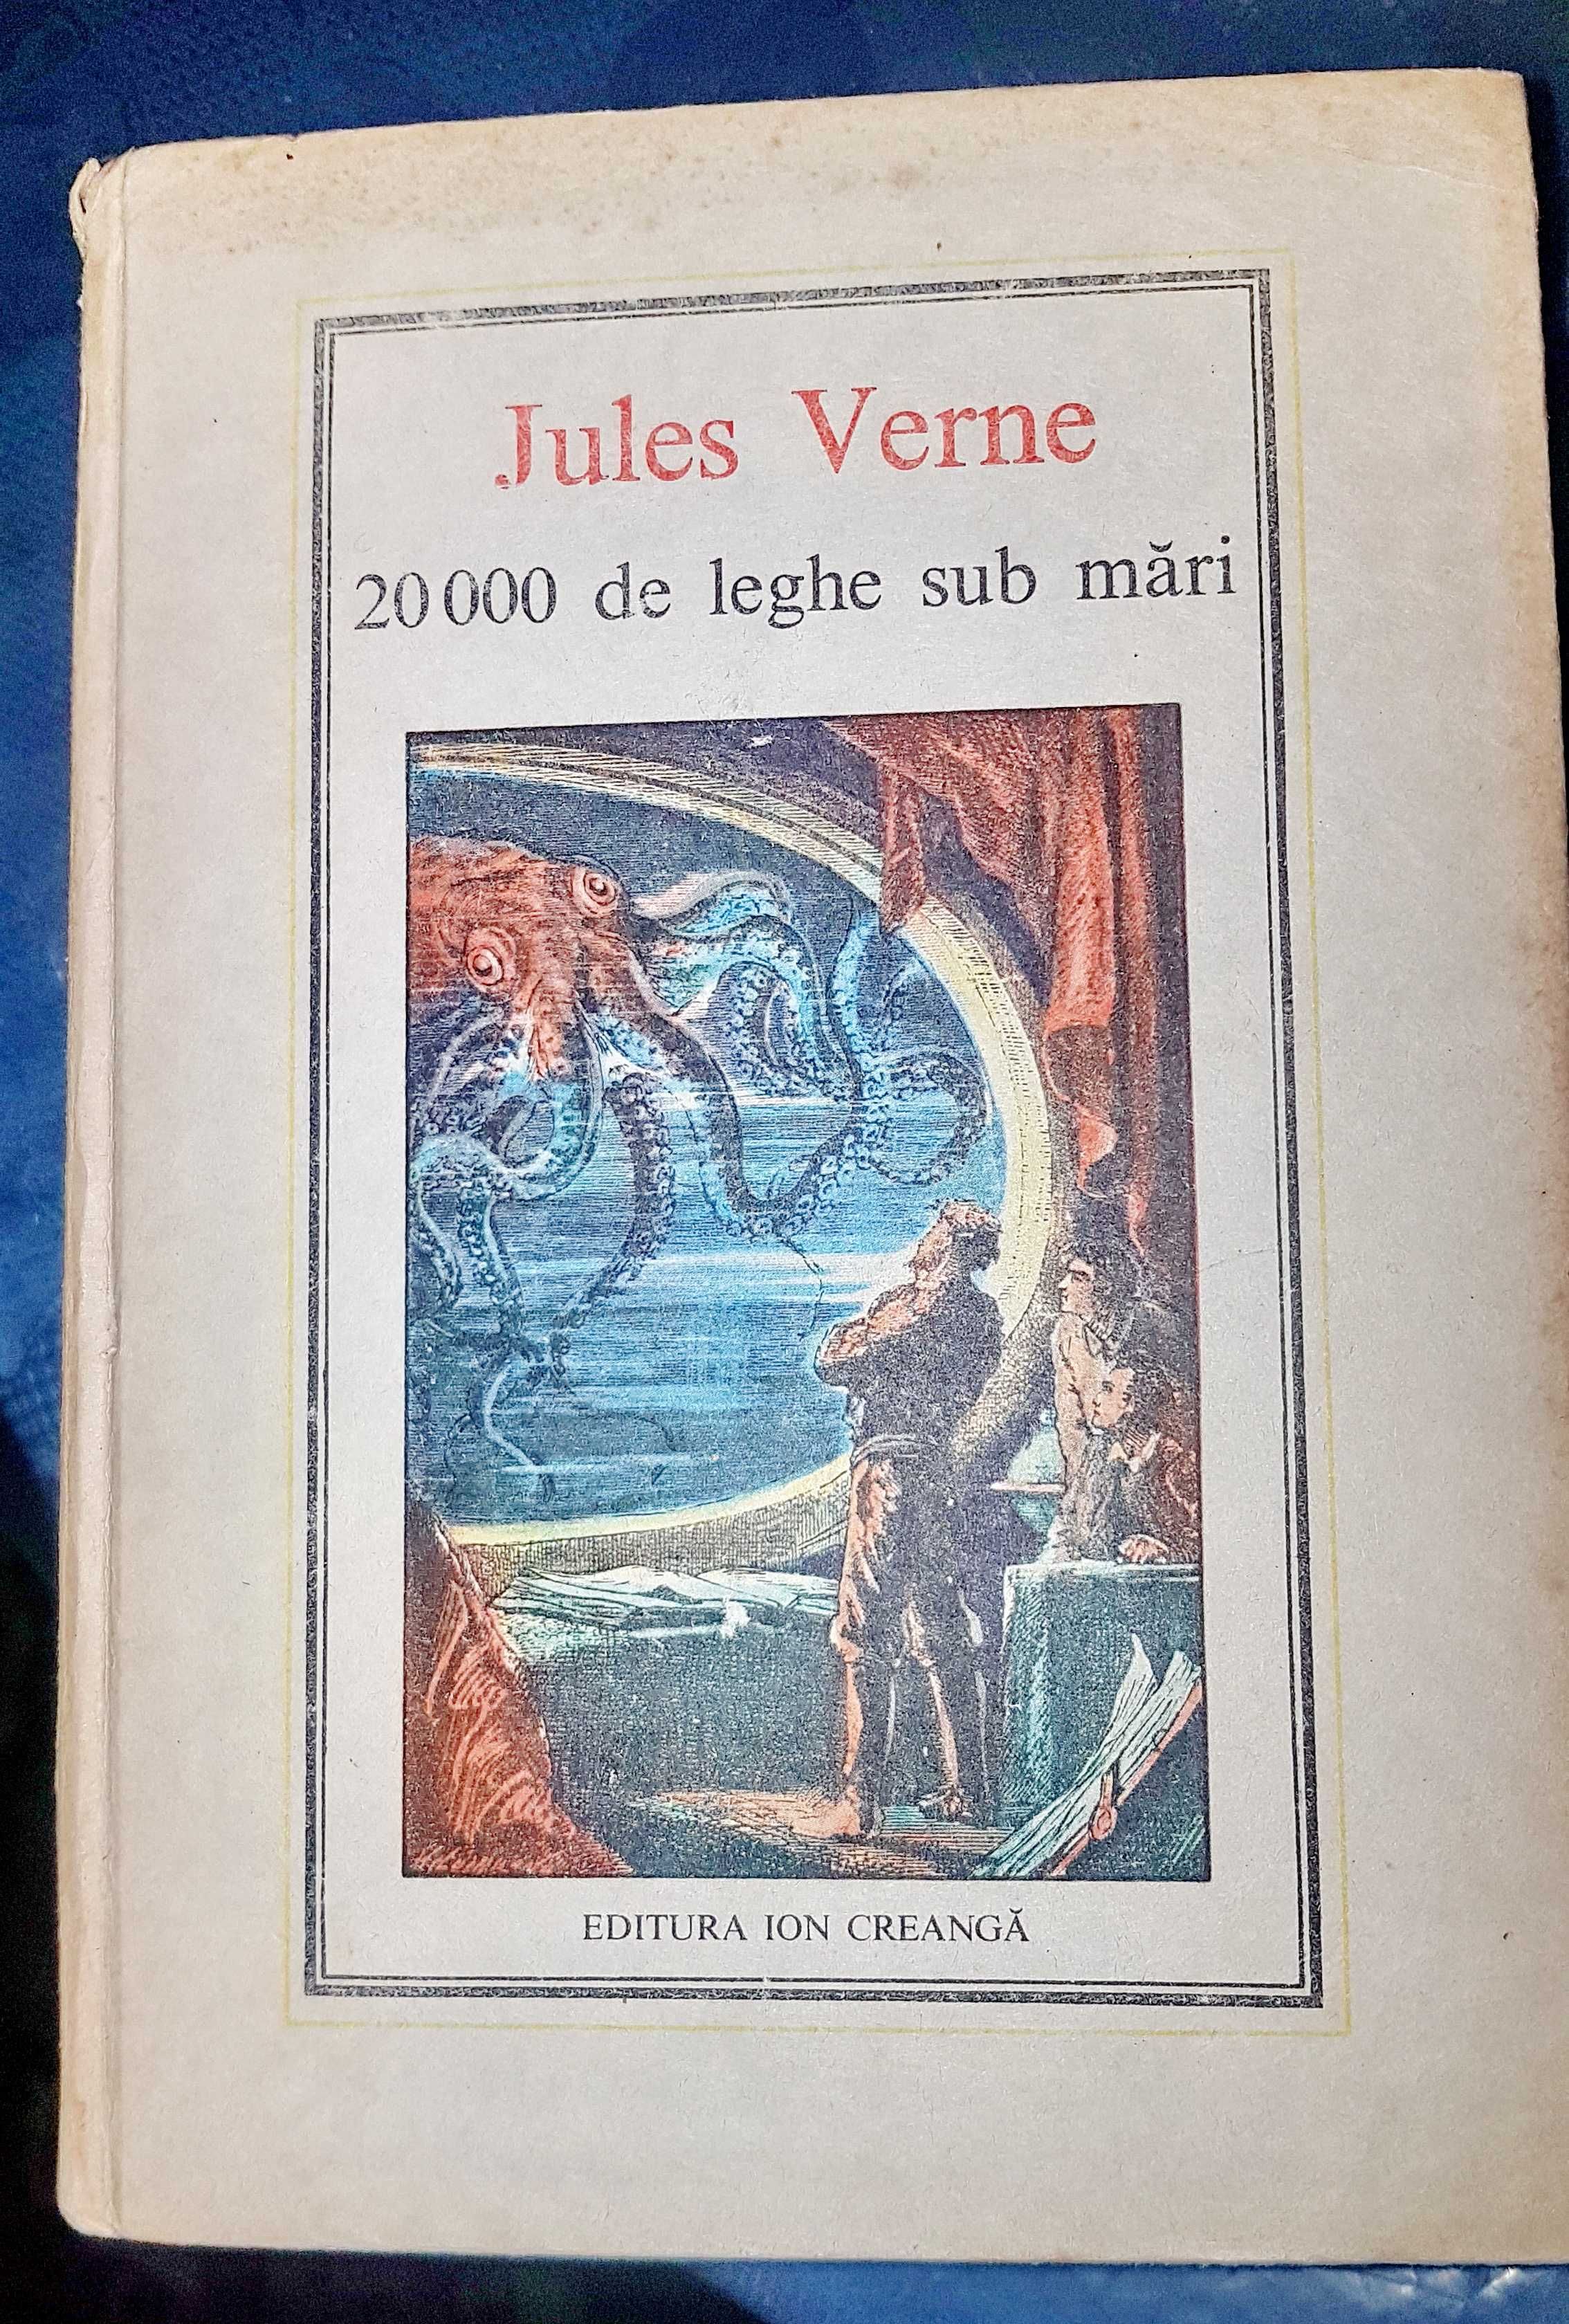 D614-Lot 10 Volume Jules Verne 20 0000 Leghe.